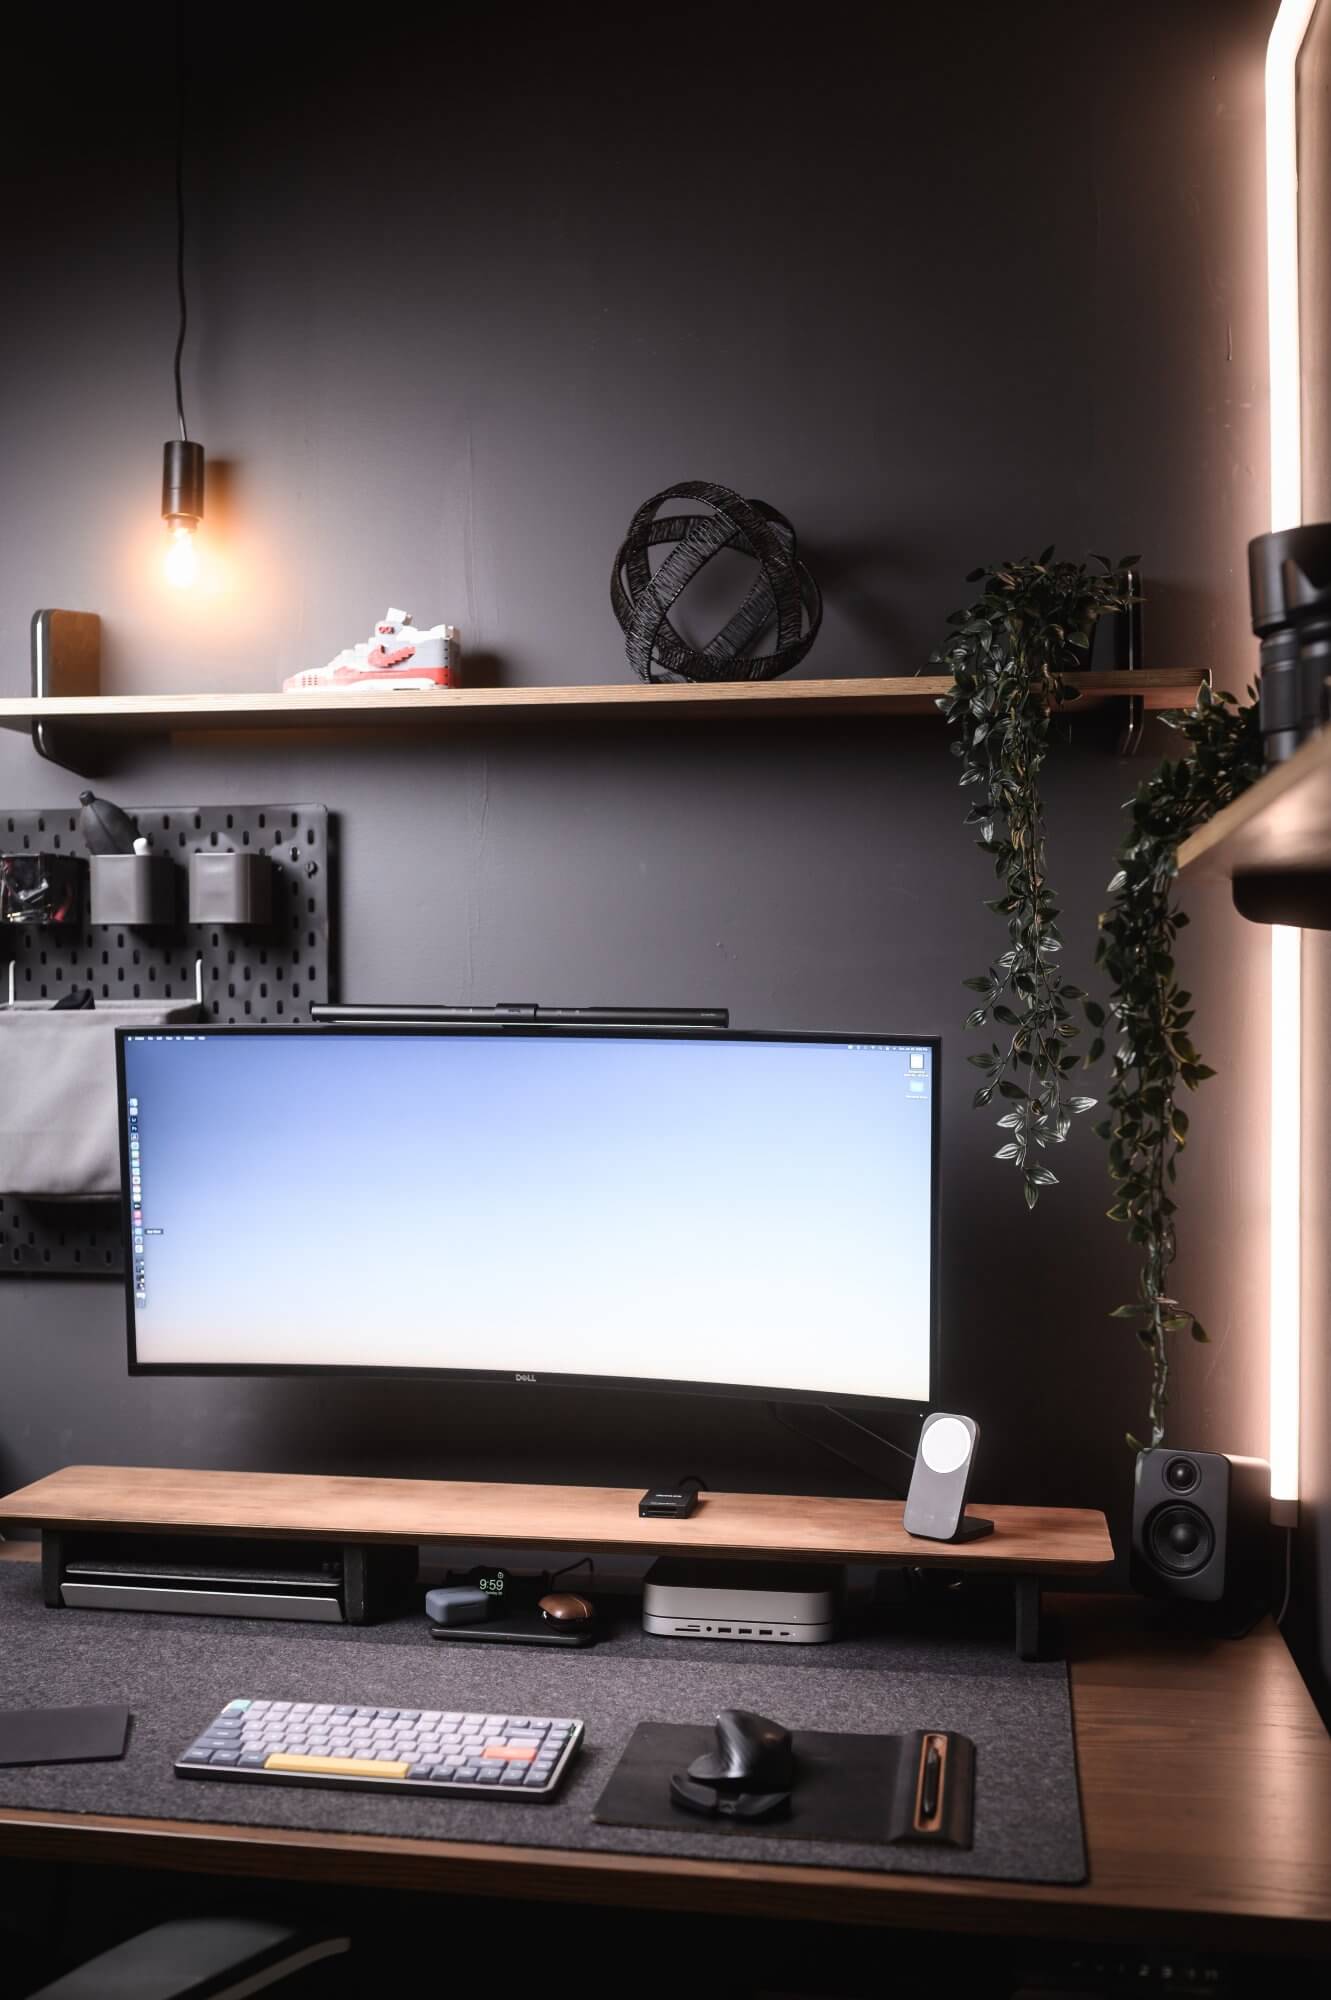 A desk setup with walnut aesthetics